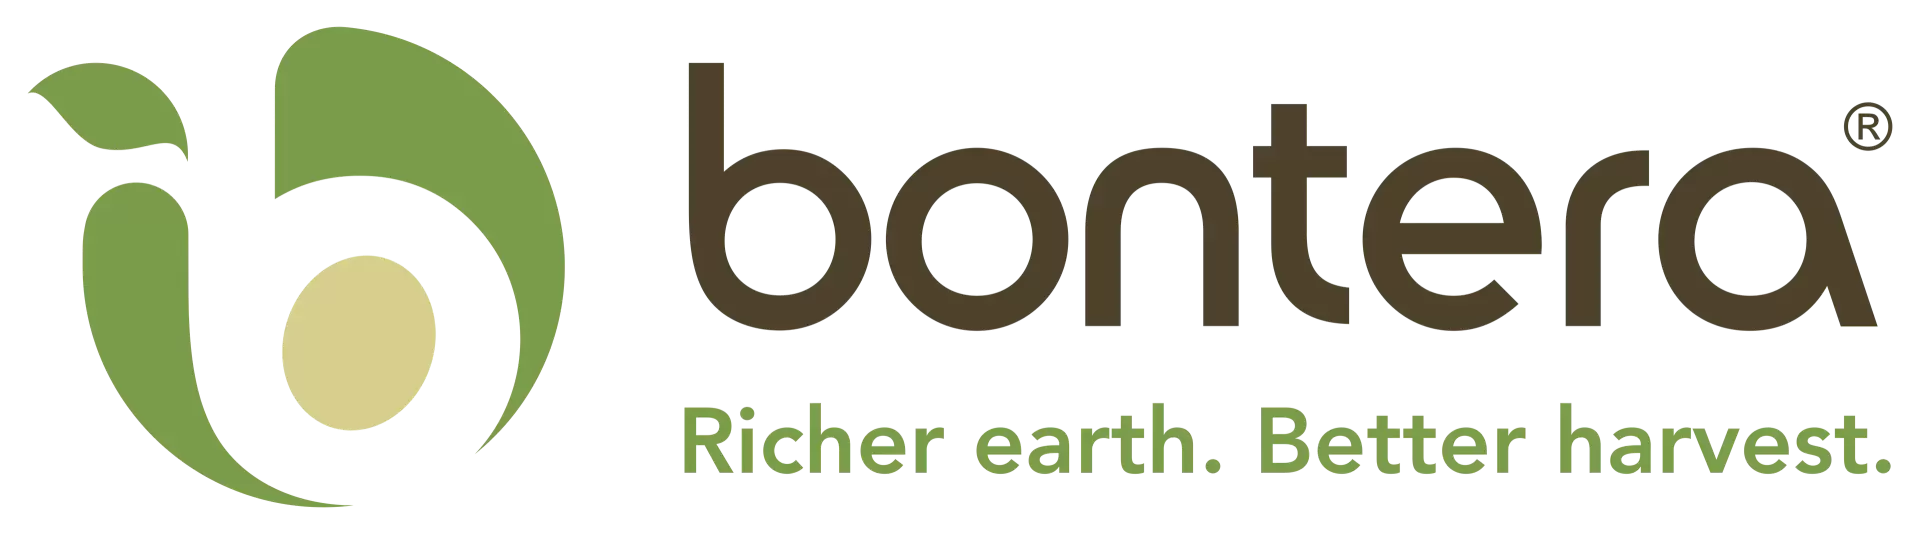 bontera logo - richer earth, better harvest - earth tones, and green